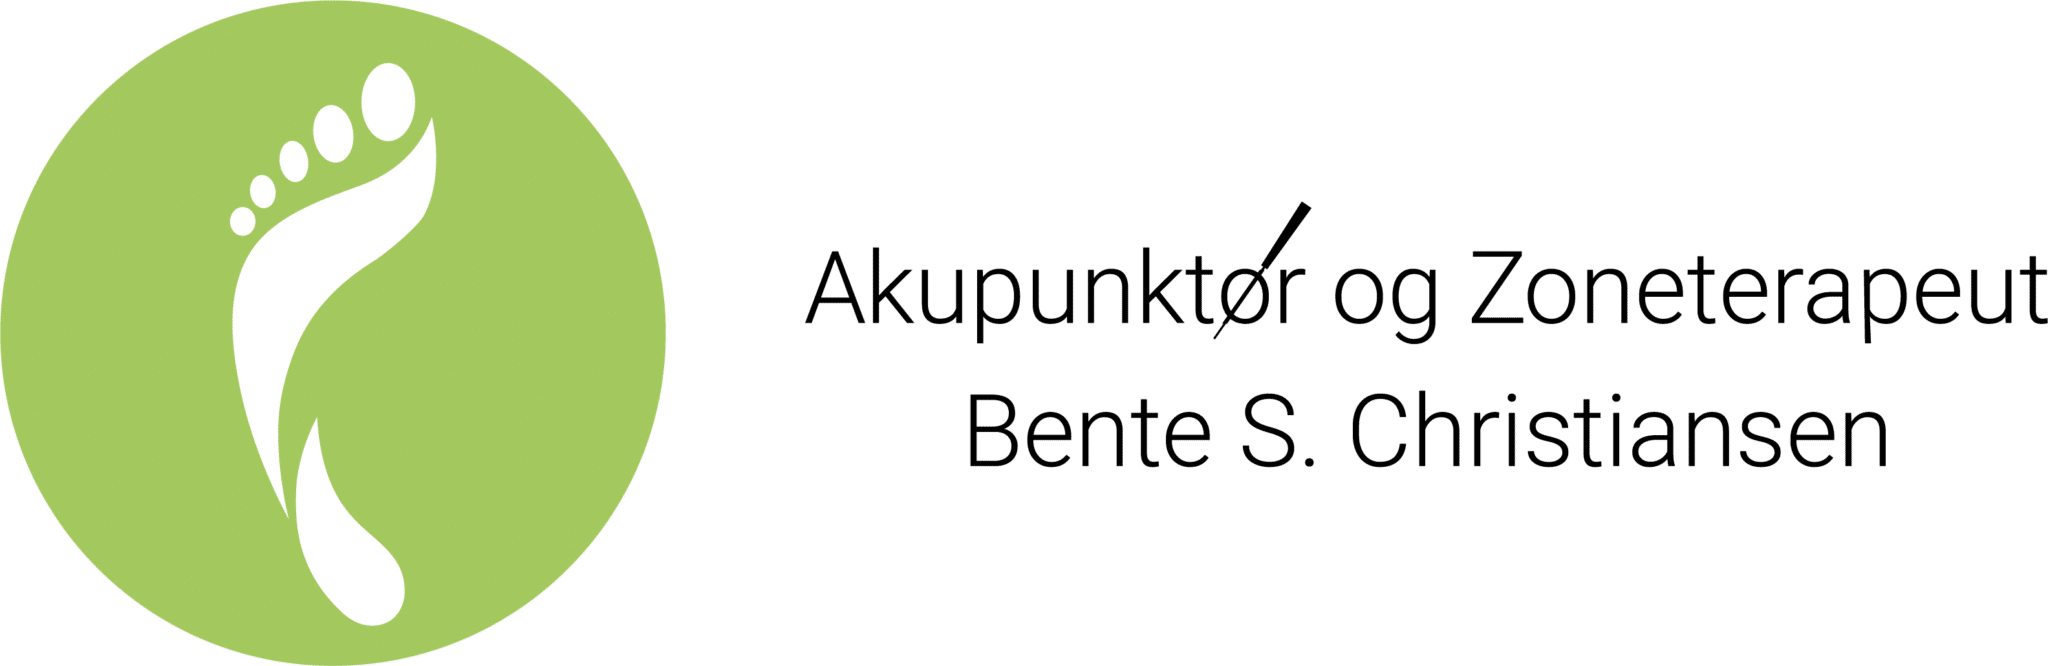 Akupunktør og Zoneterapeut Bente S. Christiansen